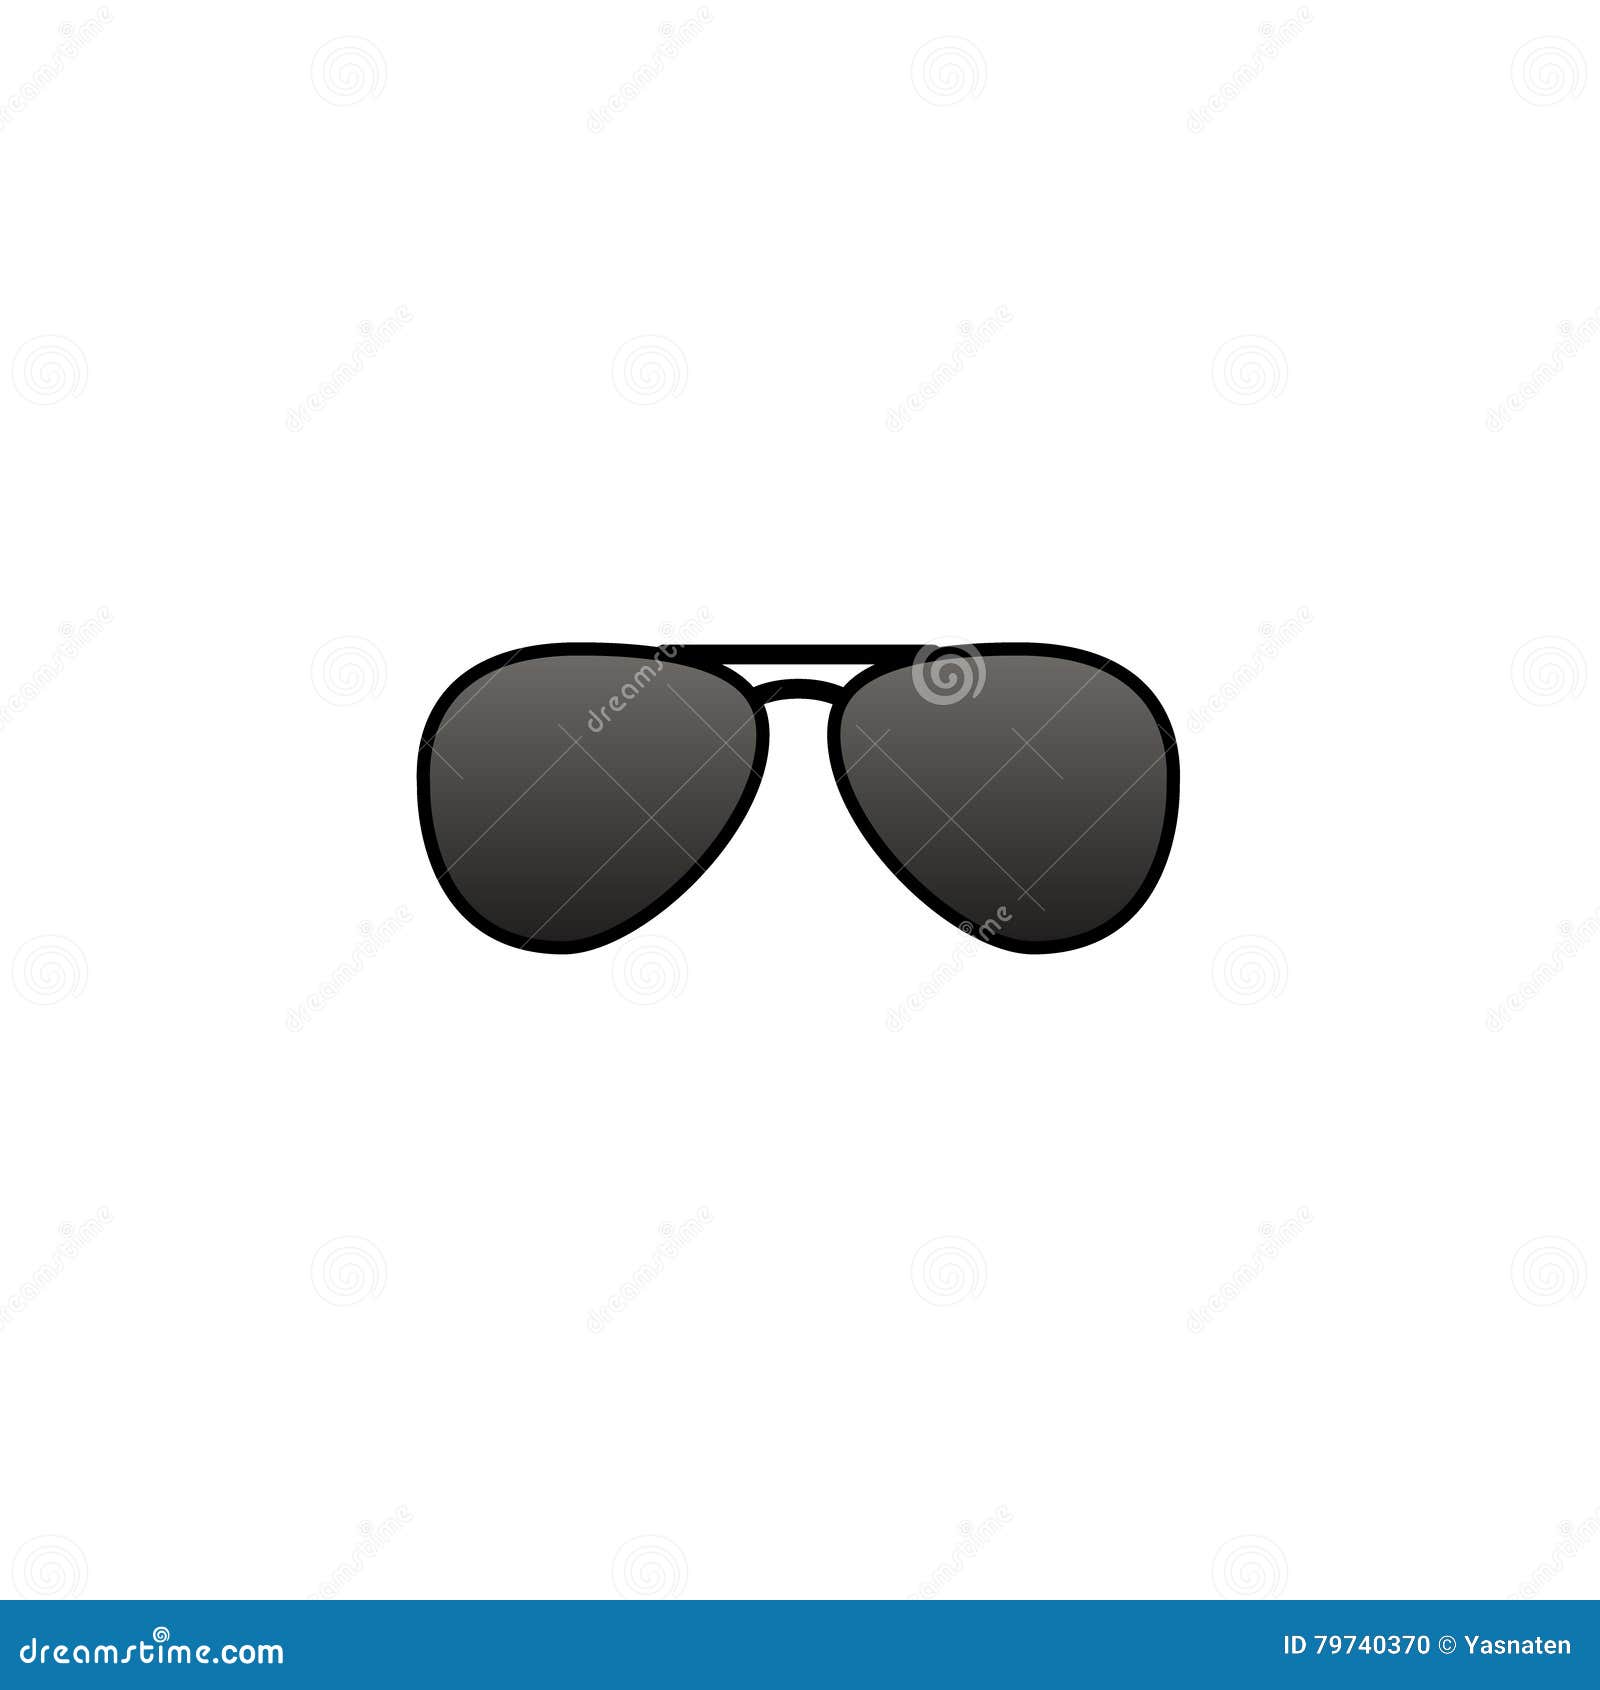  aviator sunglasses icon